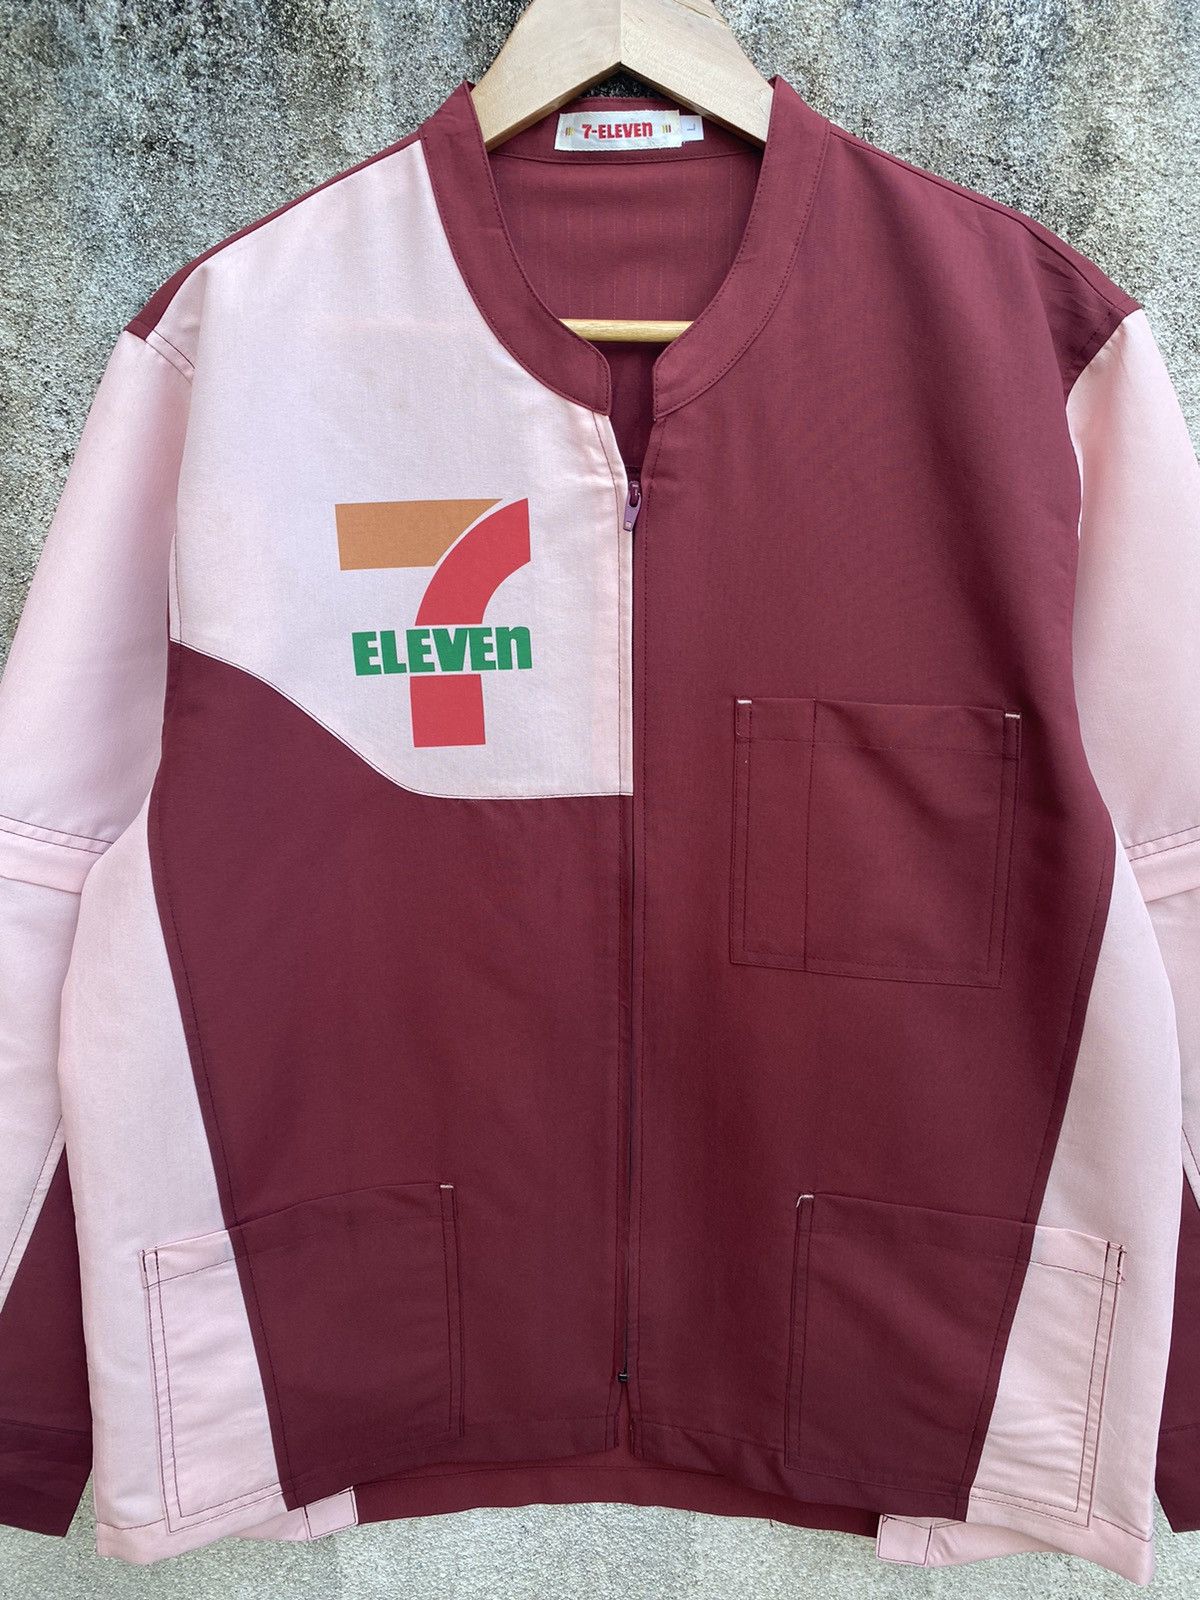 Vintage Vintage 90s 7 ELEVEN Uniform Workwear Zipper Jacket Size US L / EU 52-54 / 3 - 6 Thumbnail